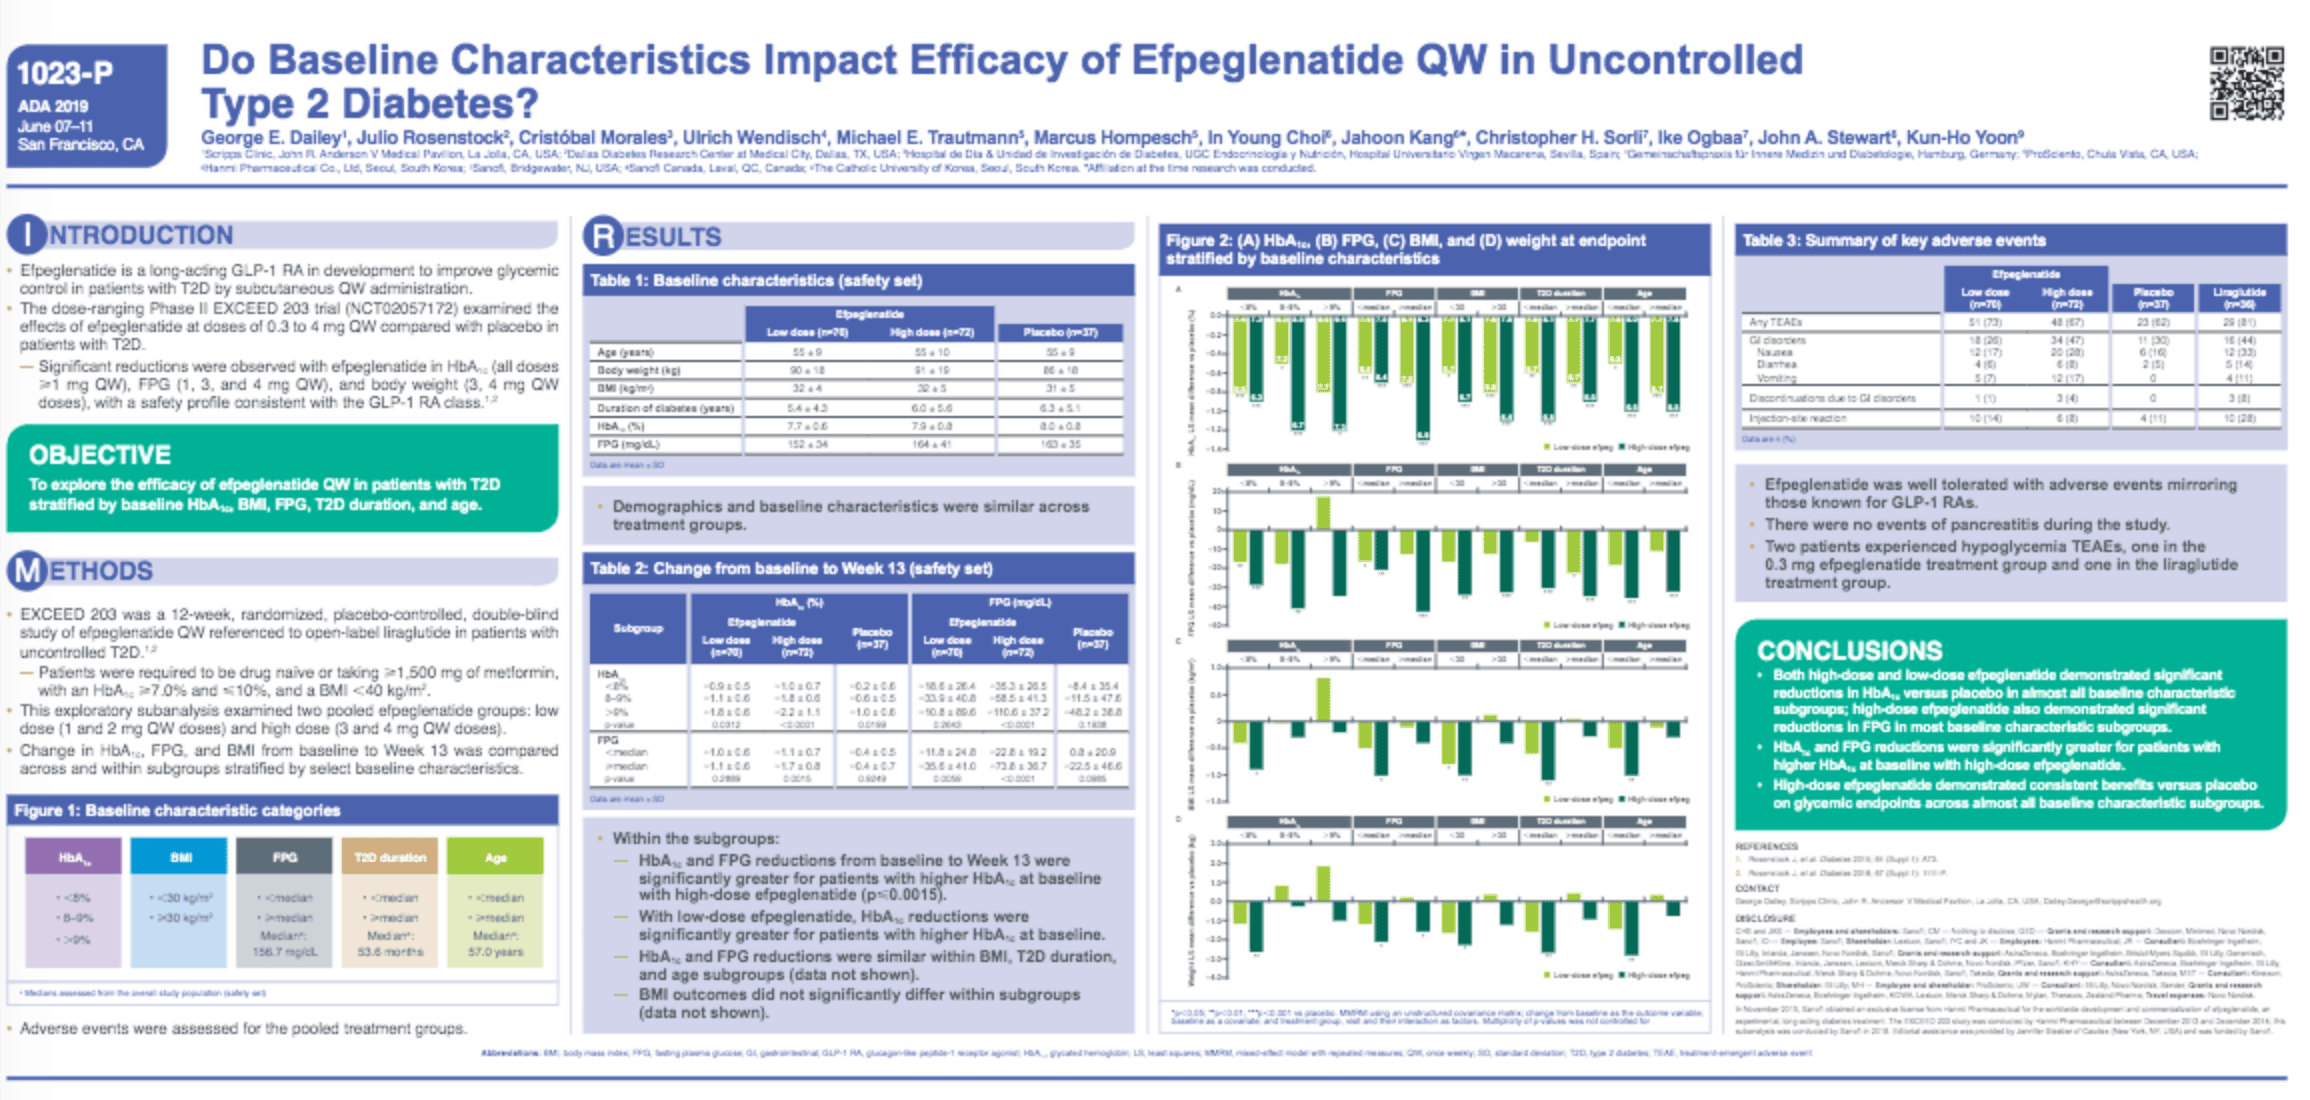 Do Baseline Characteristics Impact Efficacy of Efpeglenatide QW in Uncontrolled Type 2 Diabetes? thumbnail